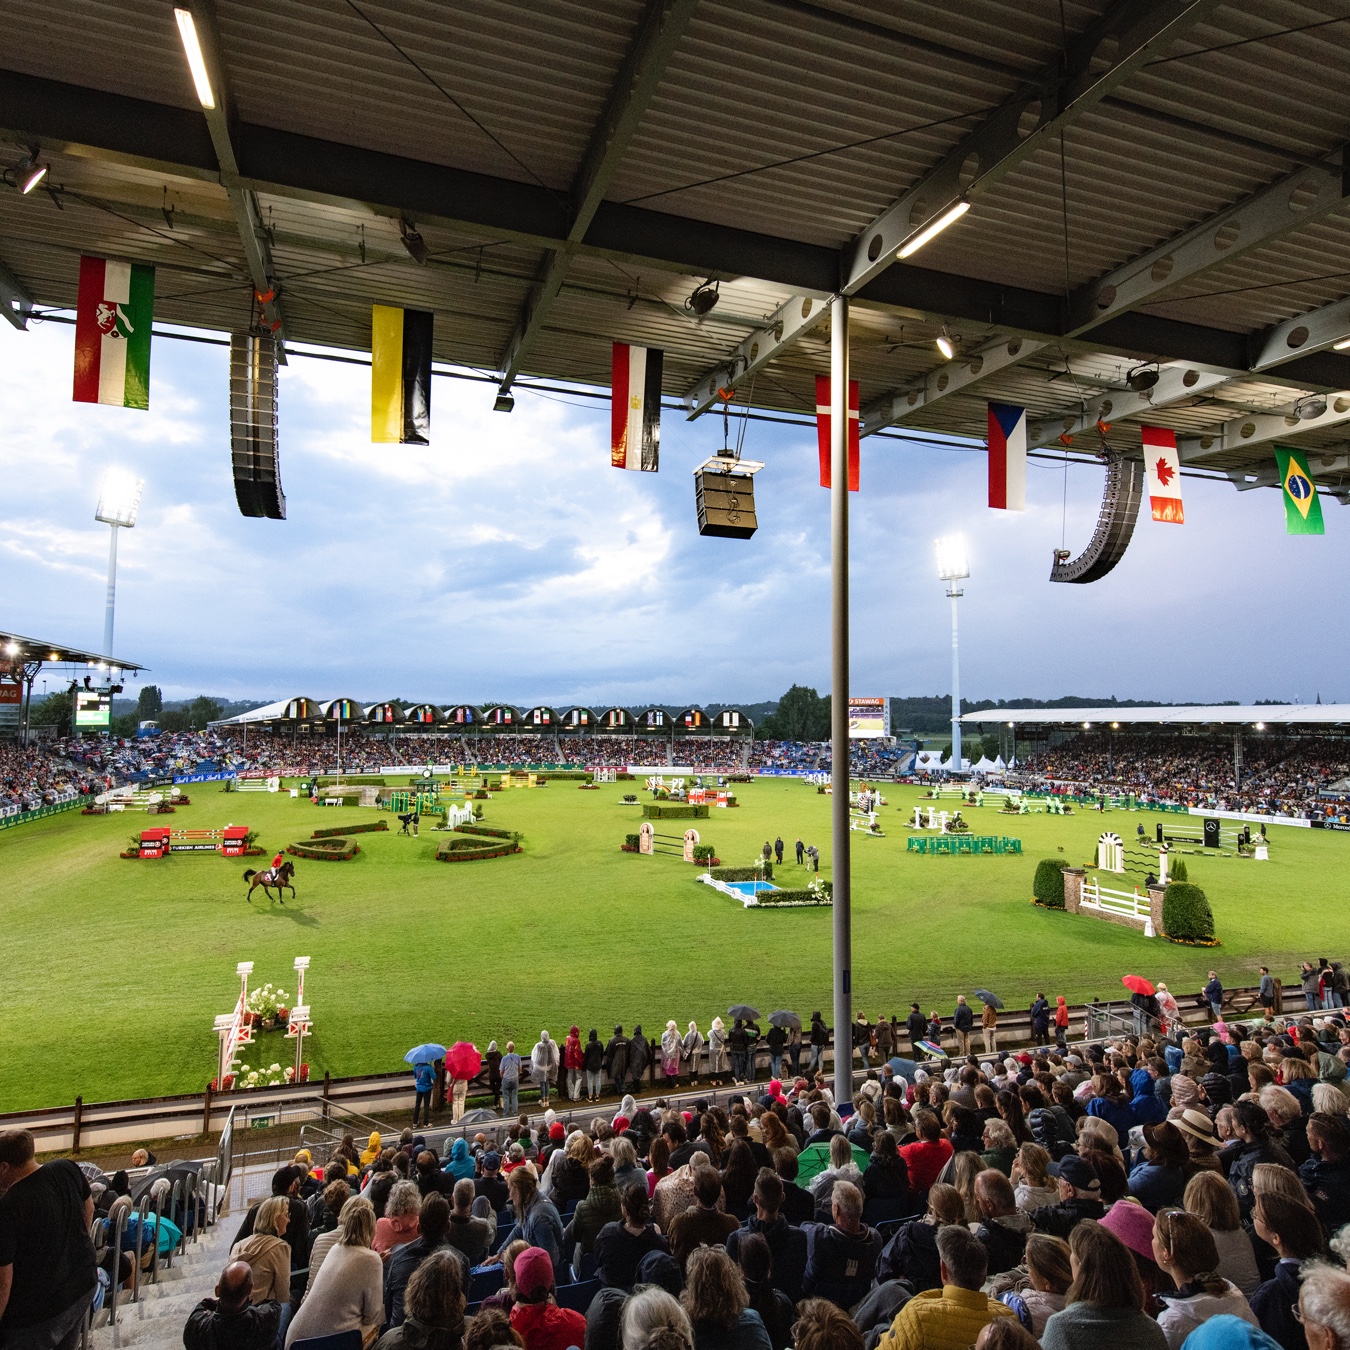 The CHIO Aachen World Equestrian Festival